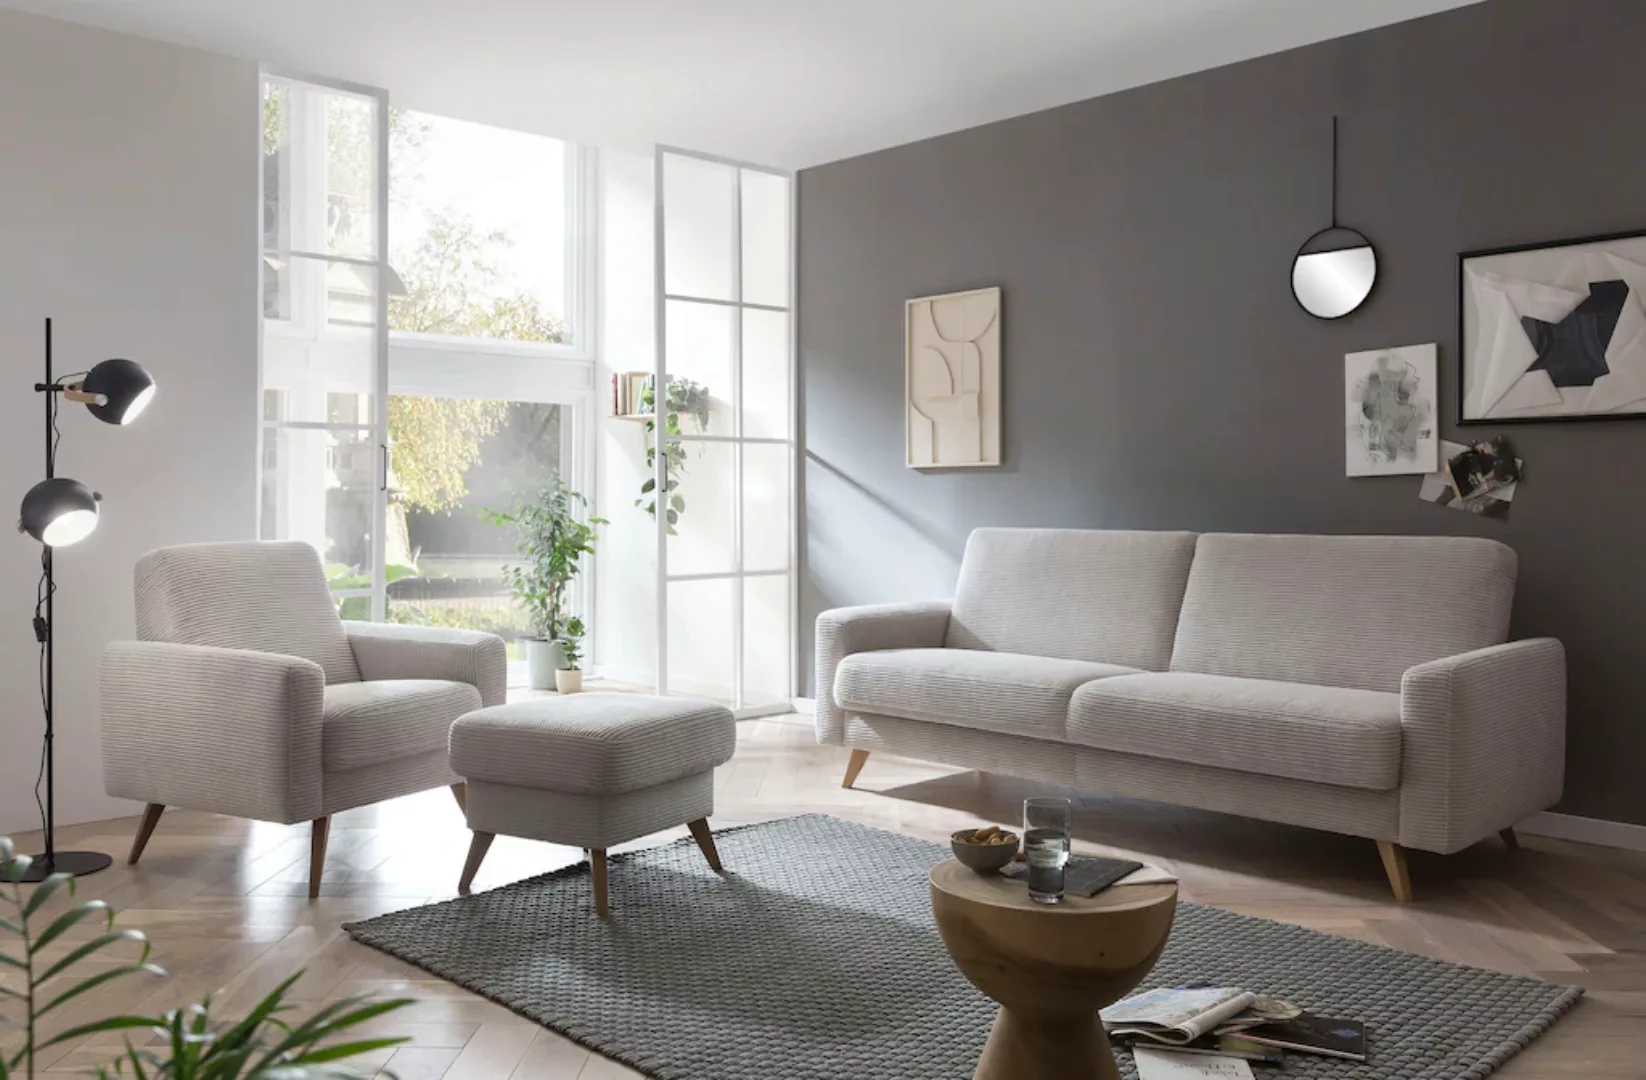 exxpo - sofa fashion Sessel "Samso" günstig online kaufen